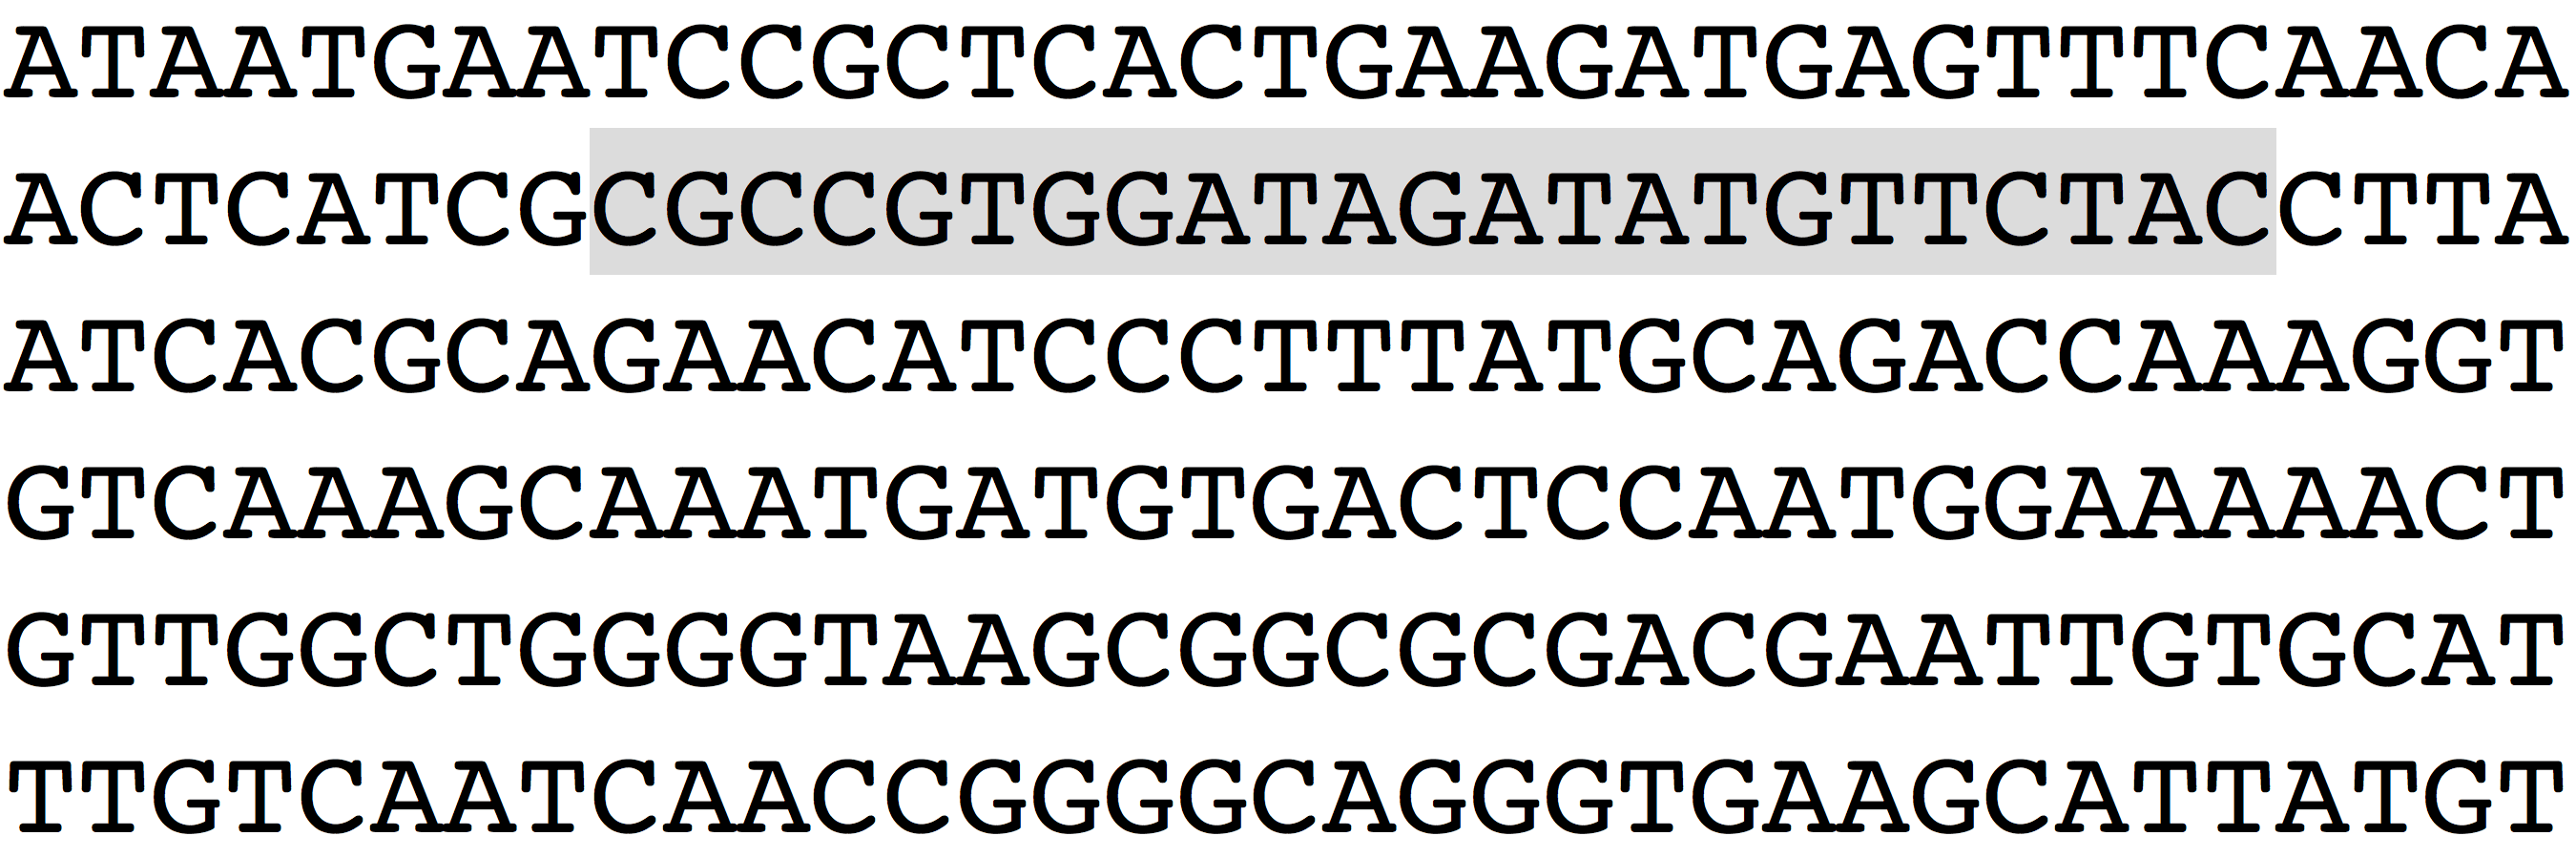 DNA 字母的序列